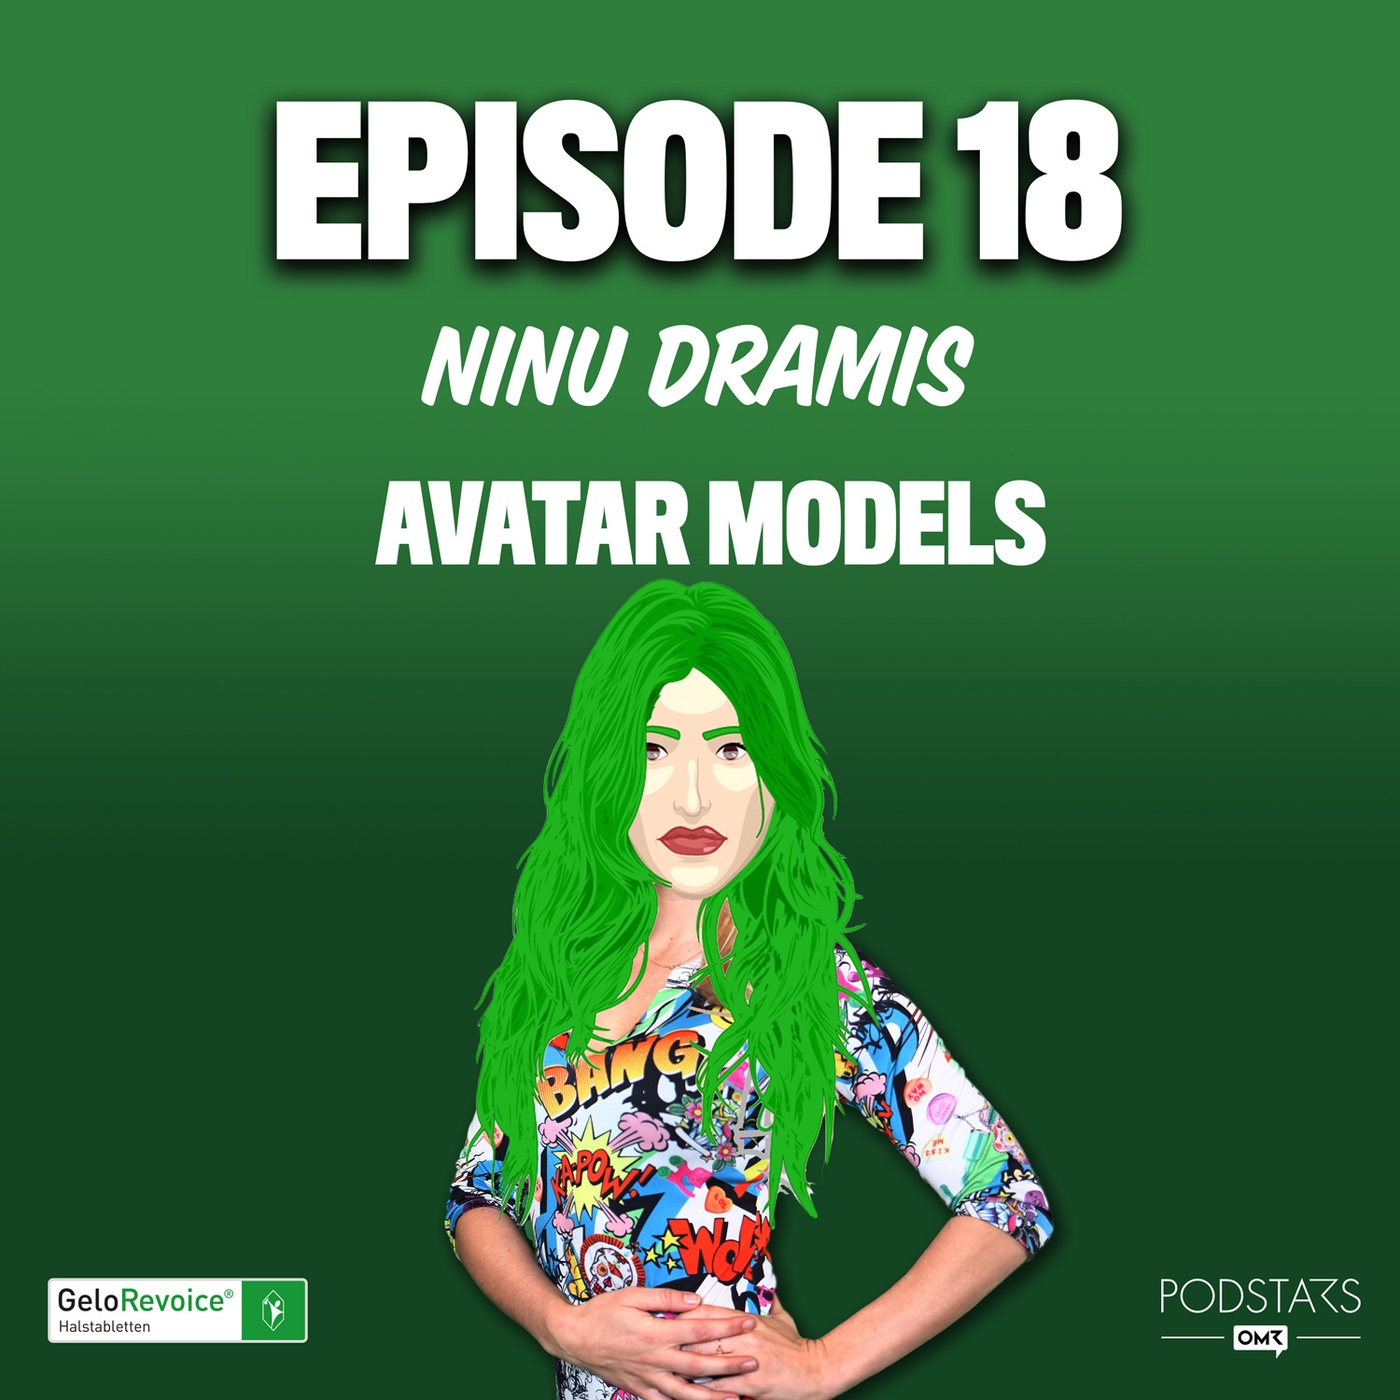 mit Avatar-Model-Designerin Ninu Dramis